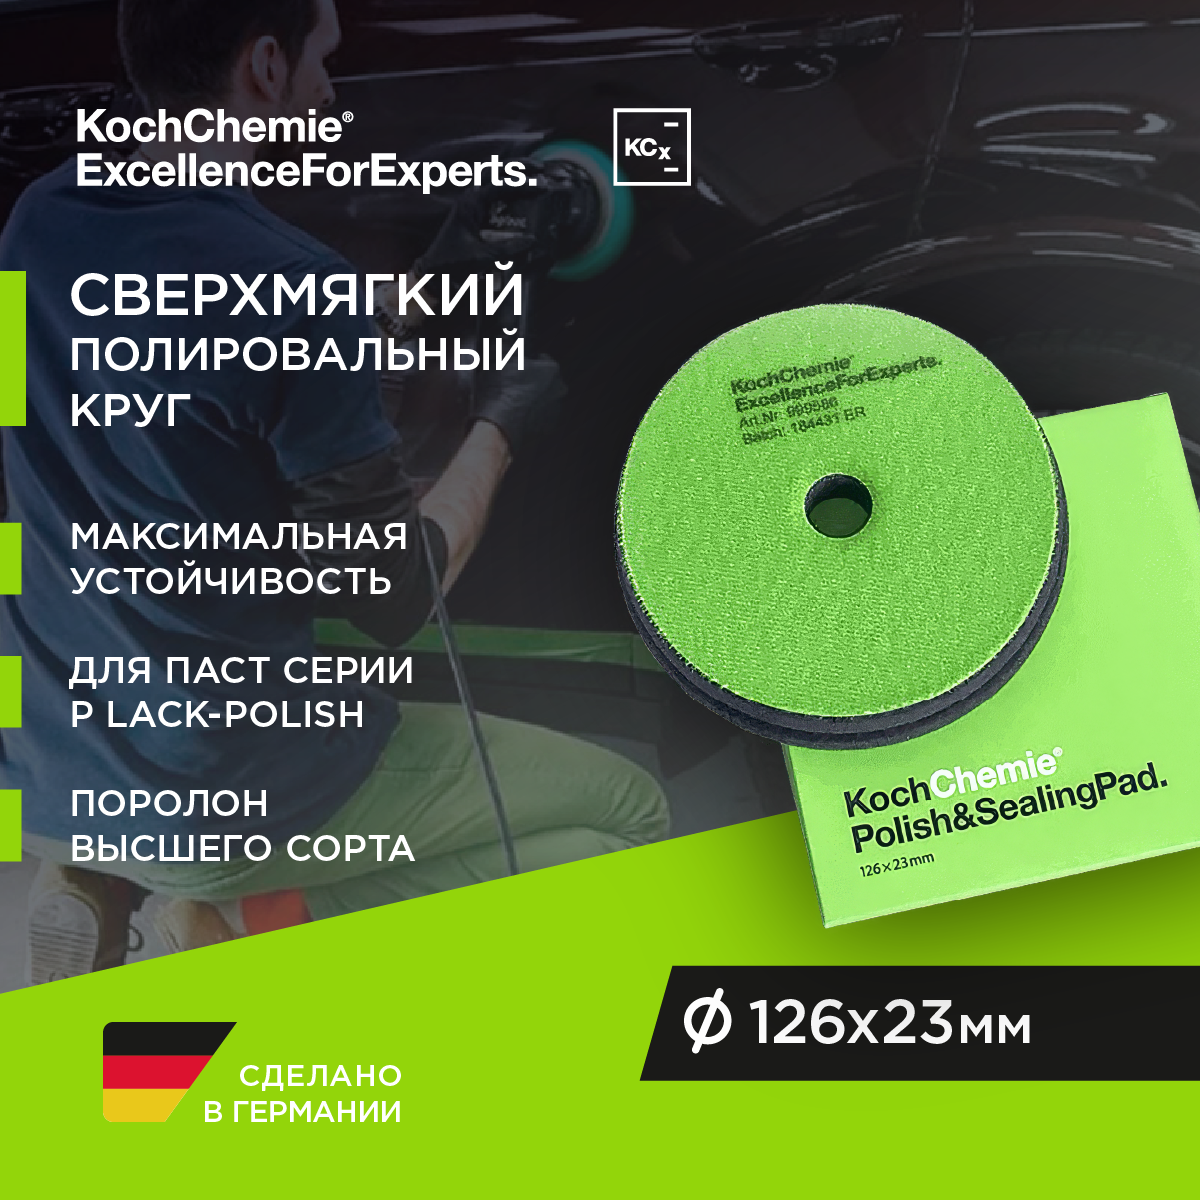 ExcellenceForExperts | Koch Chemie Polish & Sealing Pad - полировальный круг, мягкий . (126 x 23 mm)